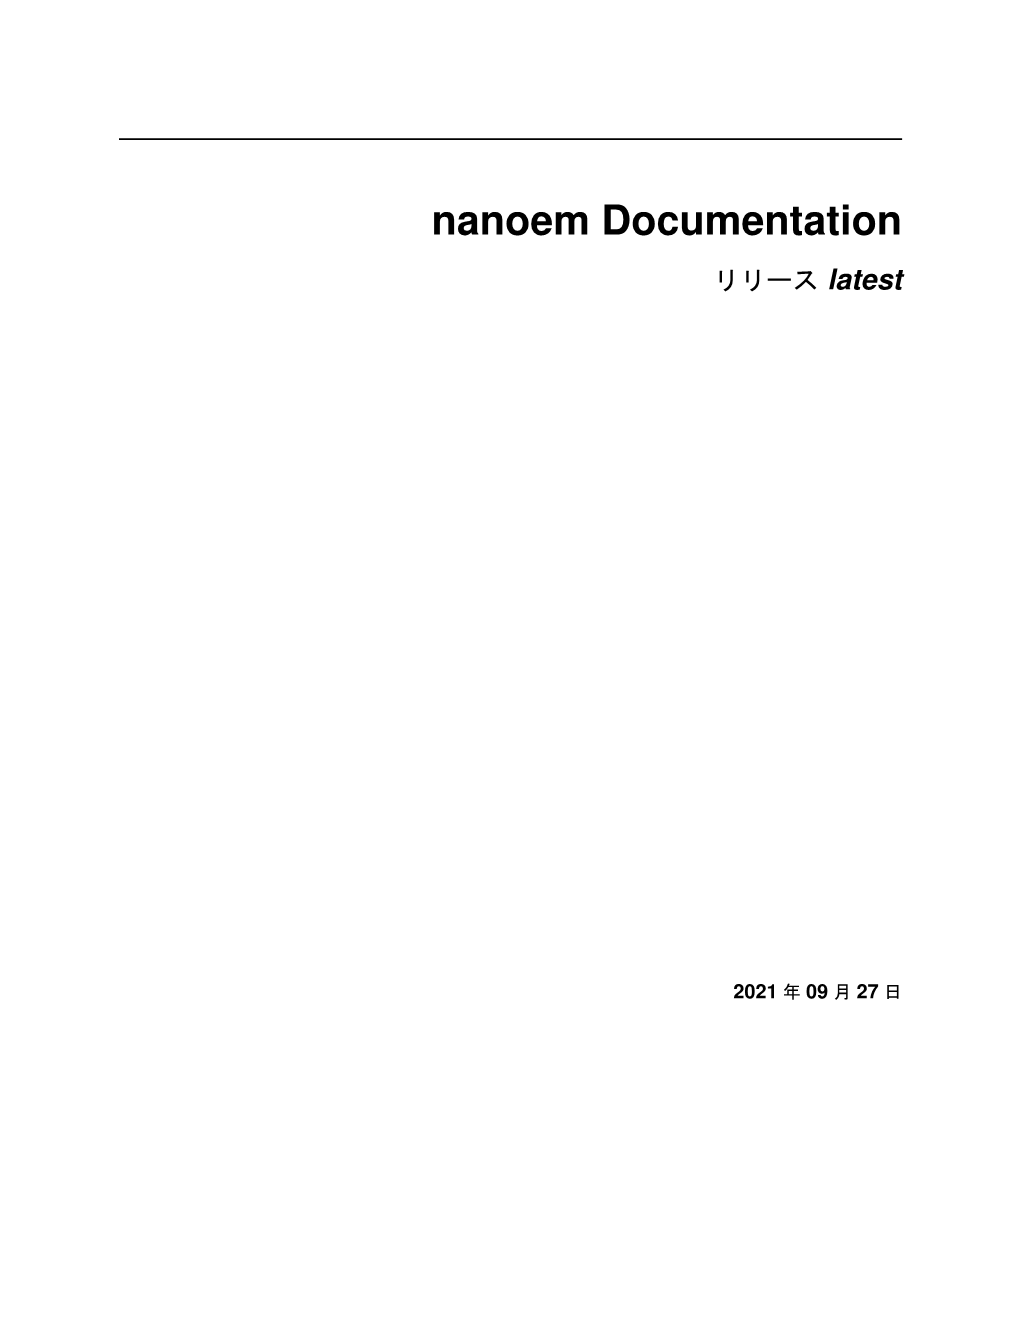 Nanoem Documentation リリース Latest